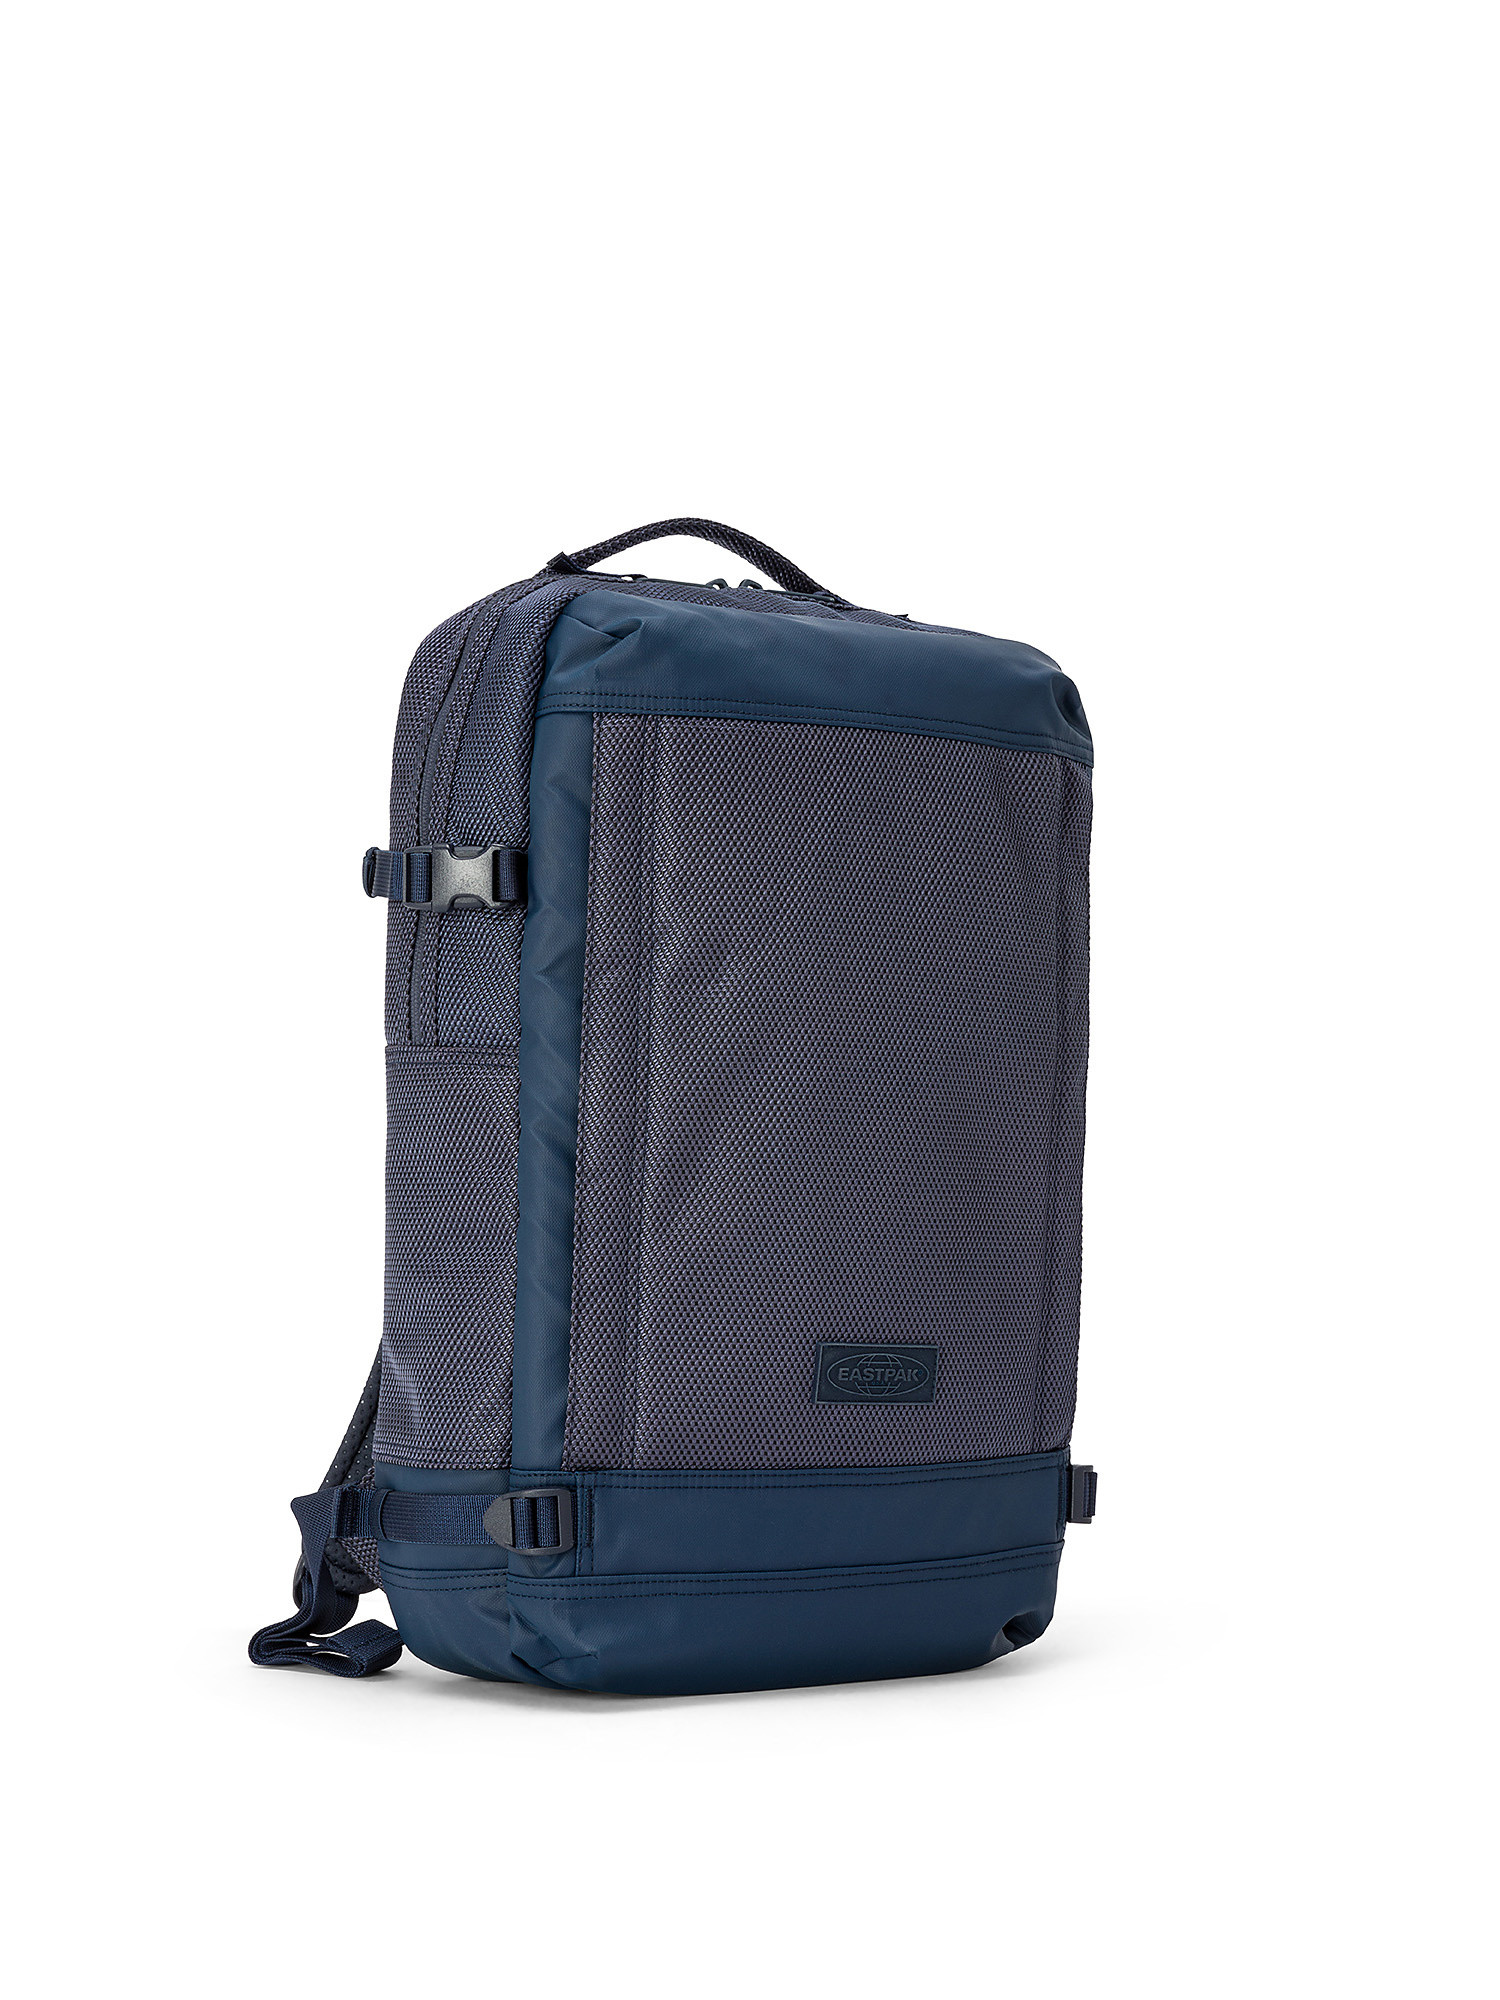 Eastpak - Tecum M Cnnct Marine Backpack, Blue, large image number 1